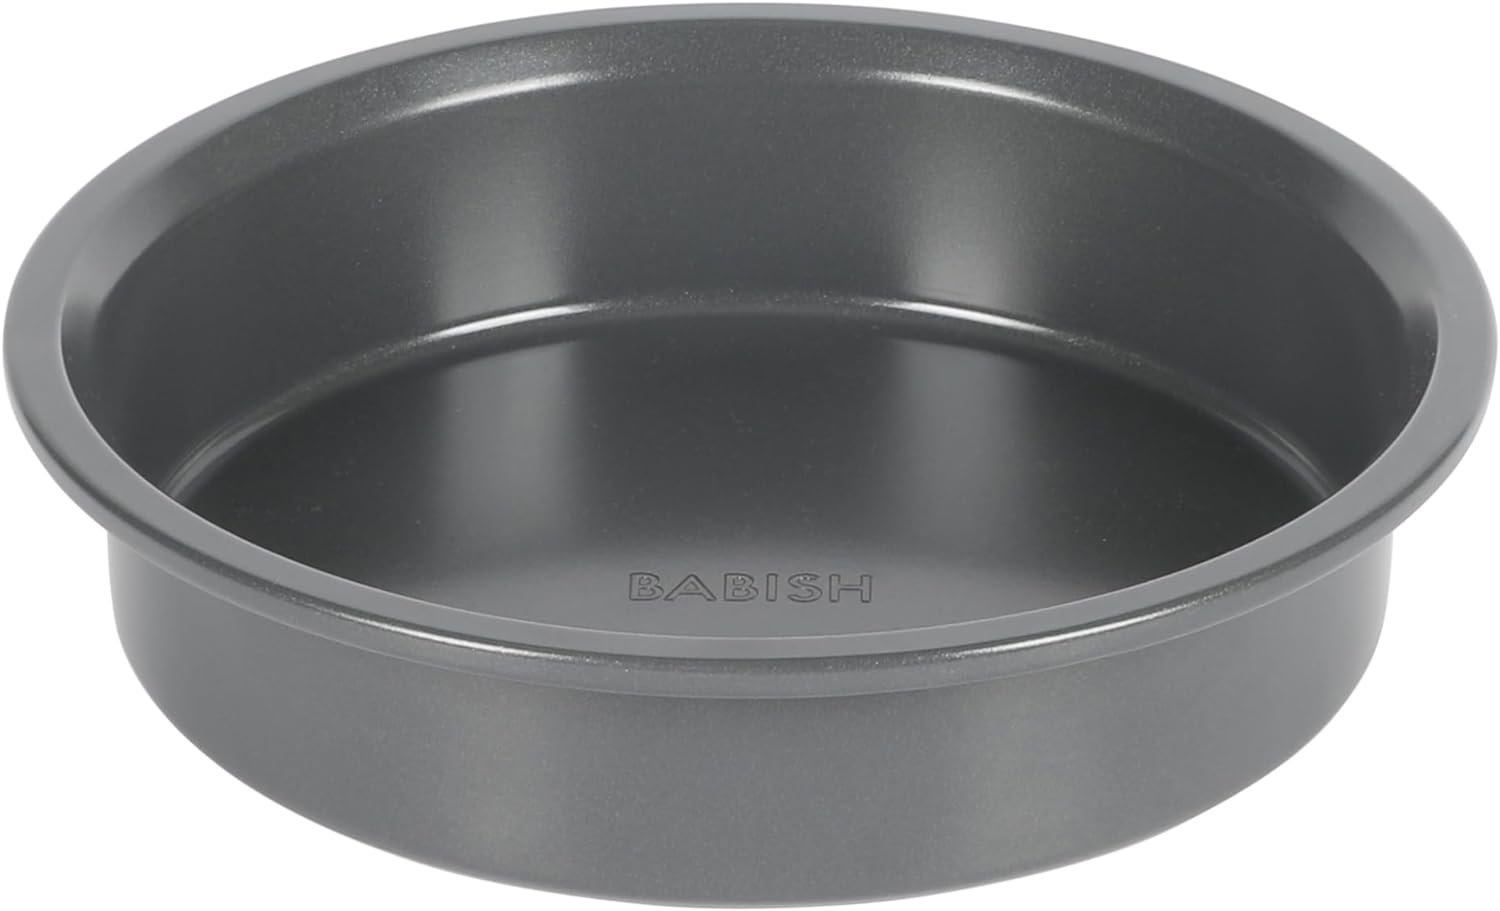 Babish 5 Piece Carbon Steel Bakeware Set